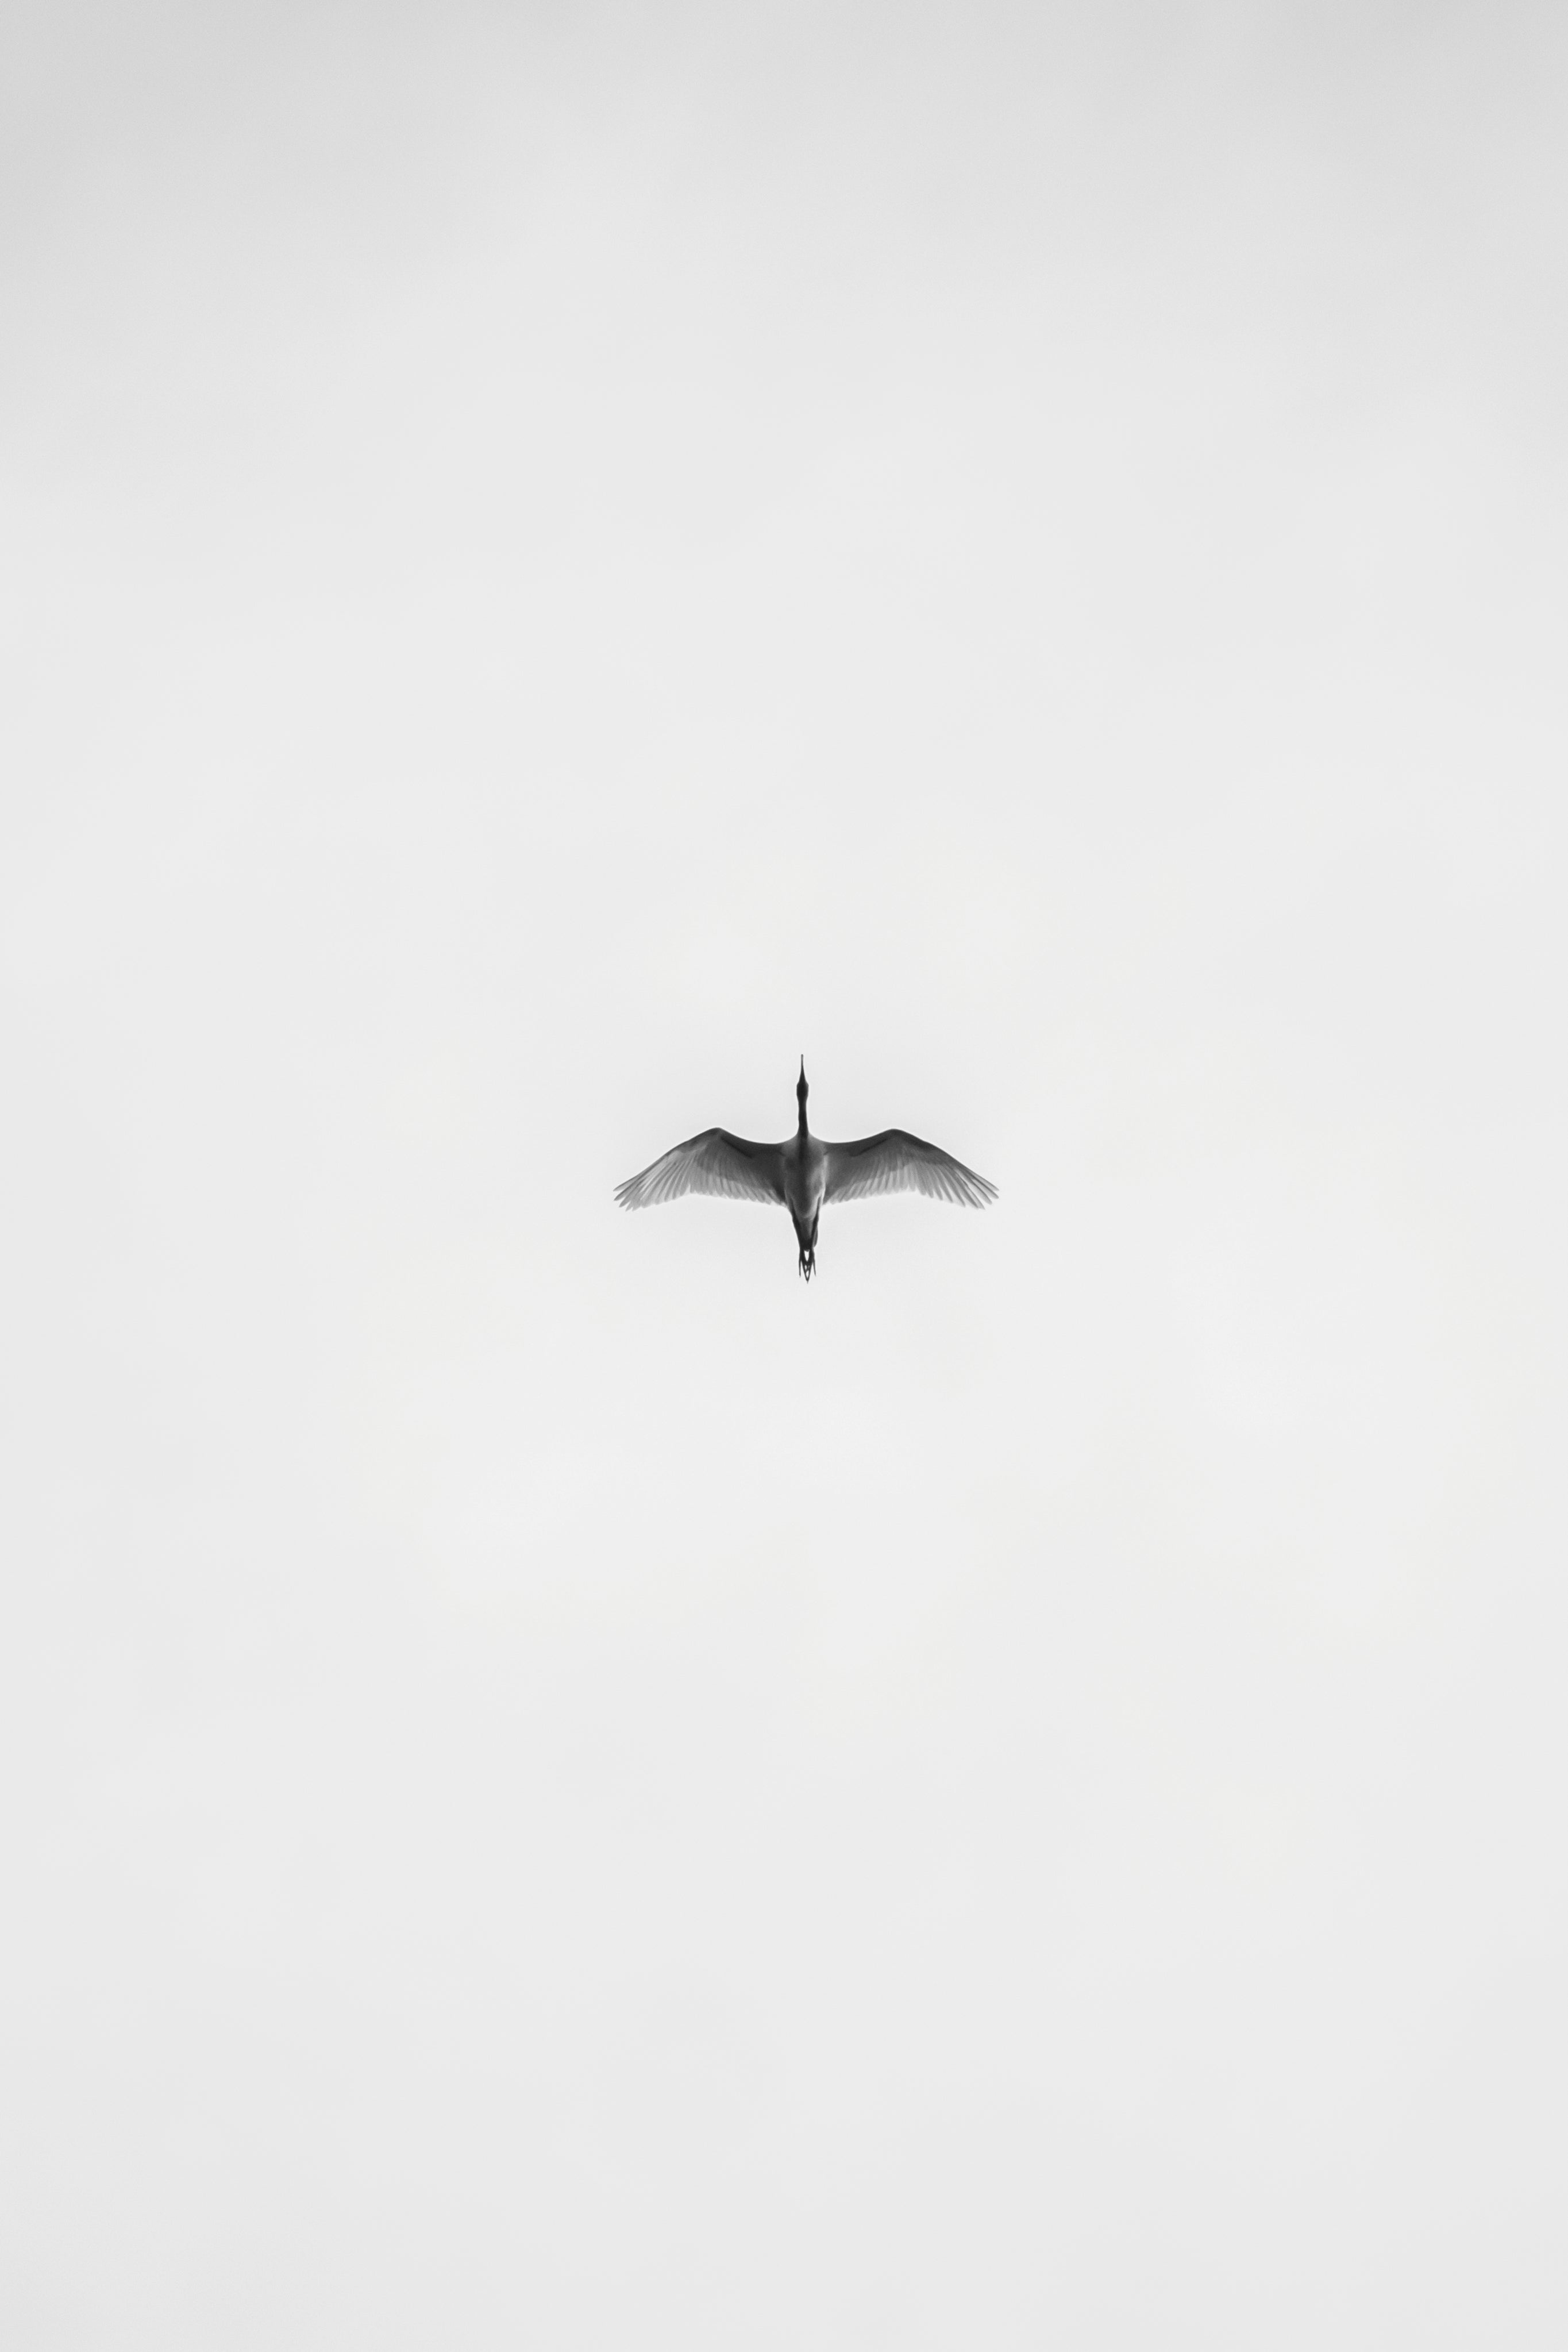 Flight Between Dreams Poster